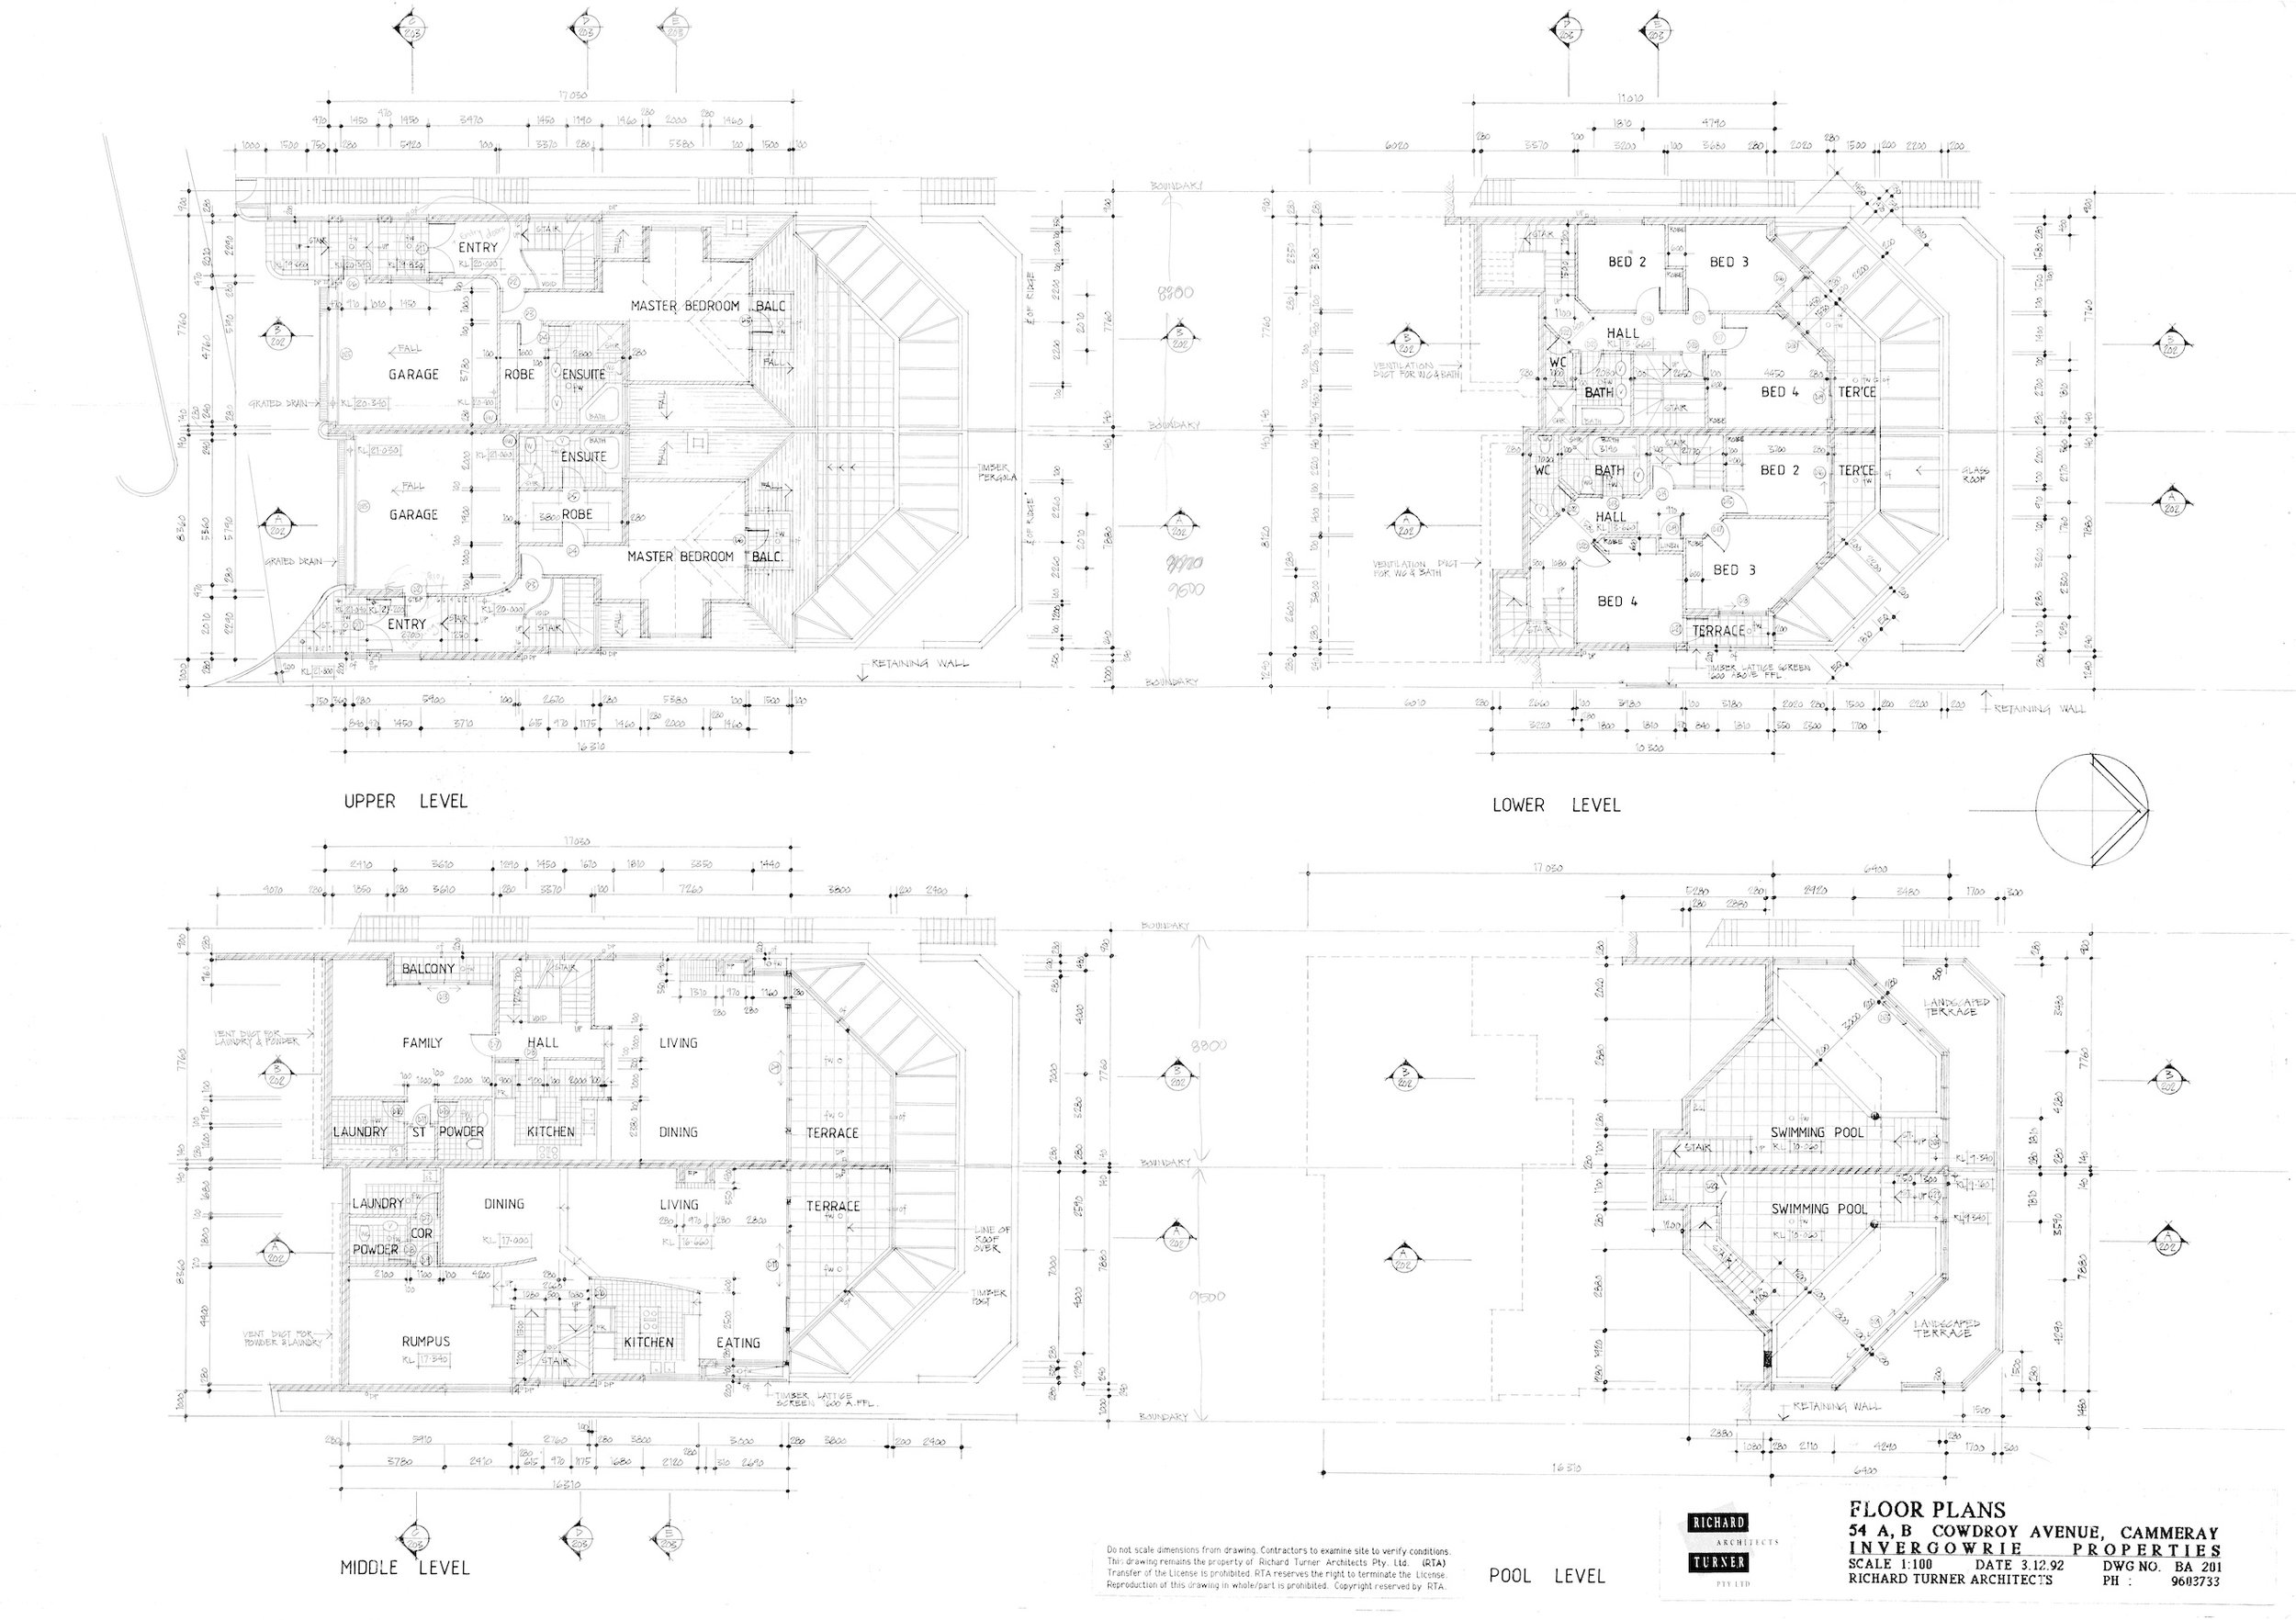 BA 201 Floor Plans.jpg